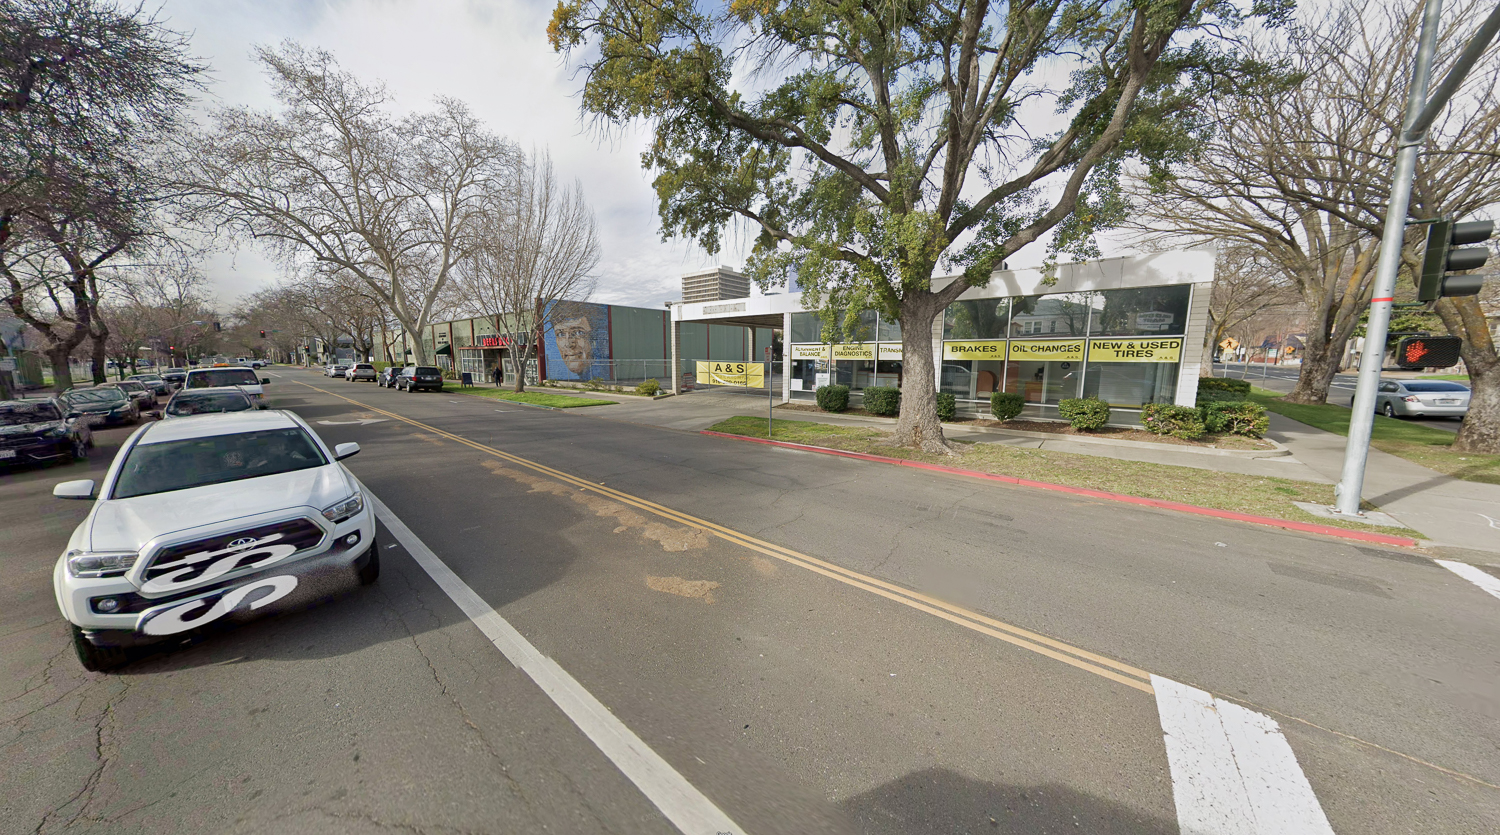 905 & 925 S Street, image via Google Street View